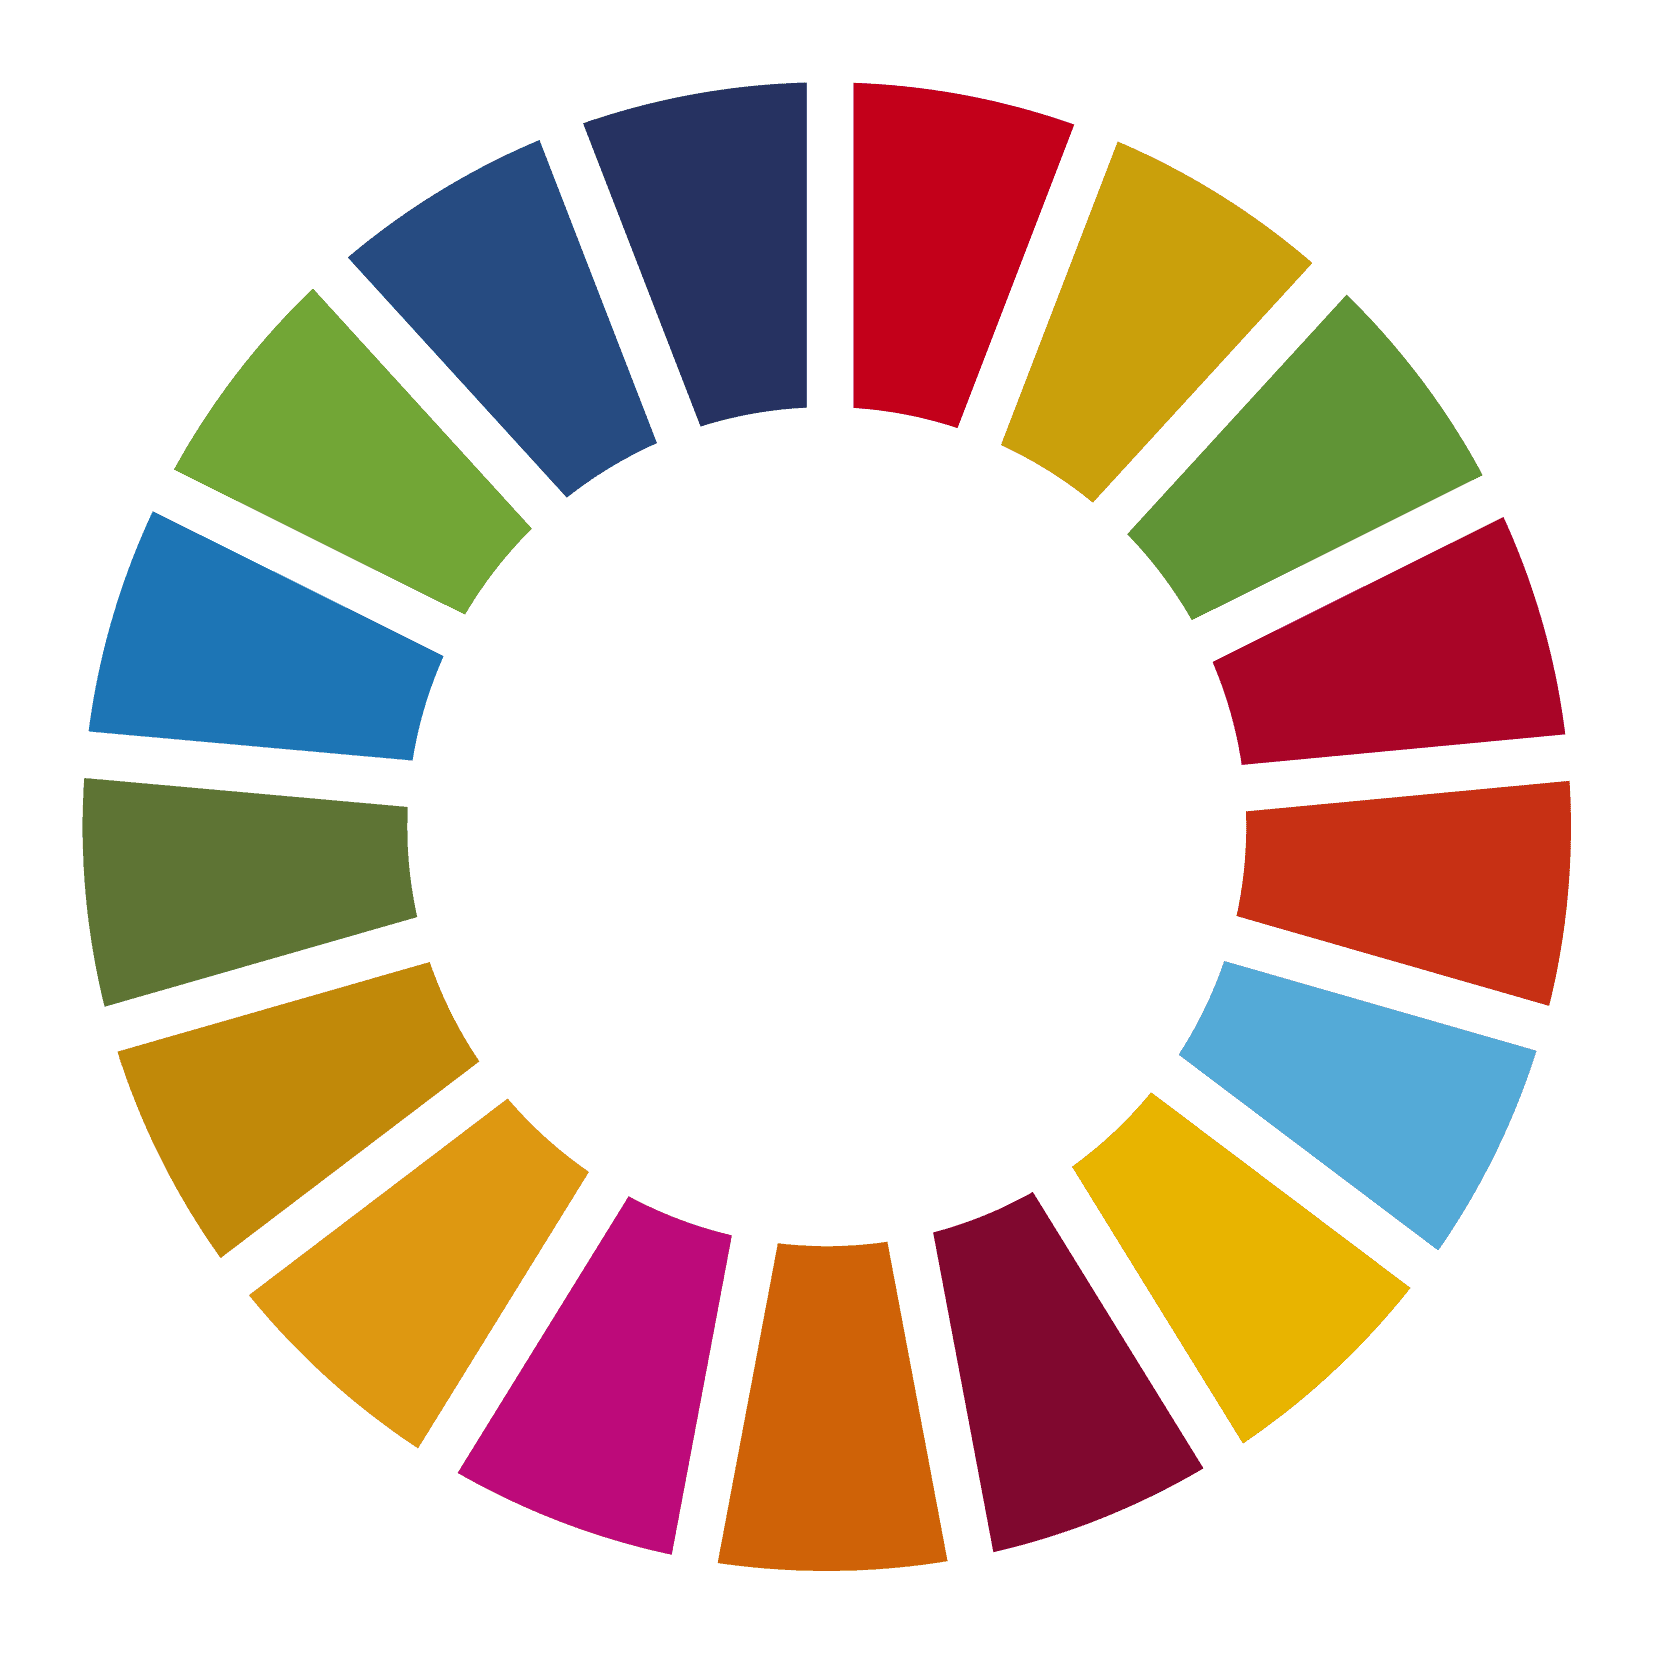 FNs Bærekraftsmål - Gi Barna Håp